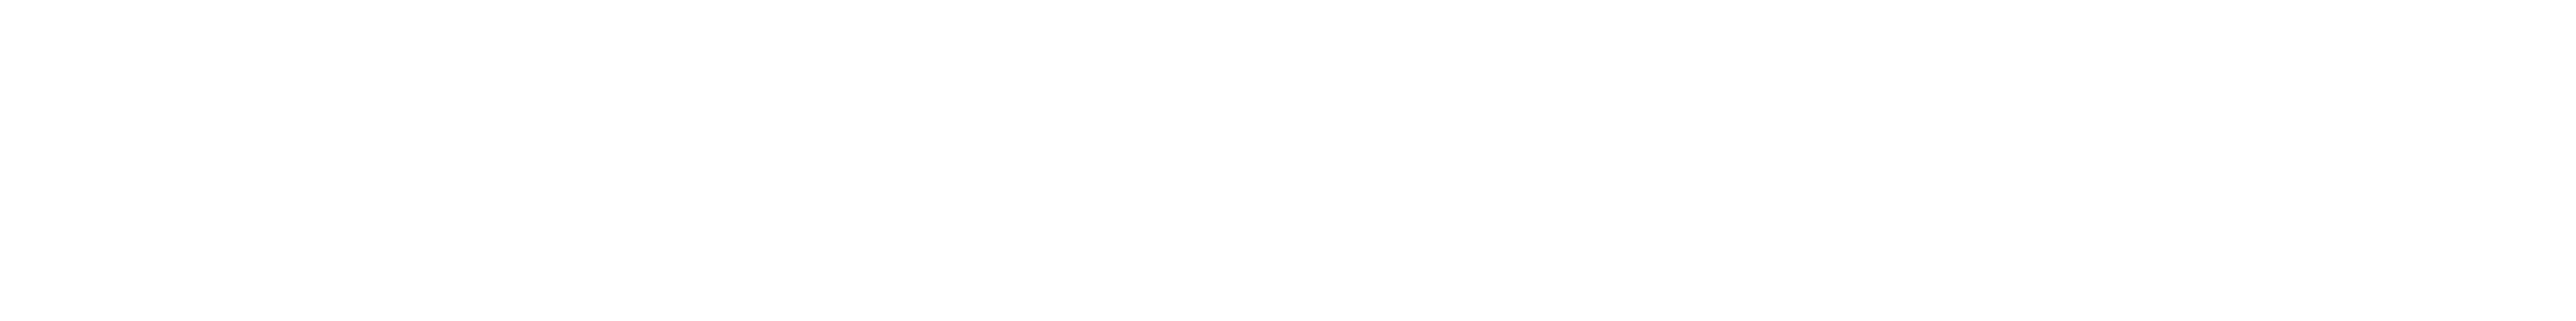 Horizontal Reverse with RJL Logo